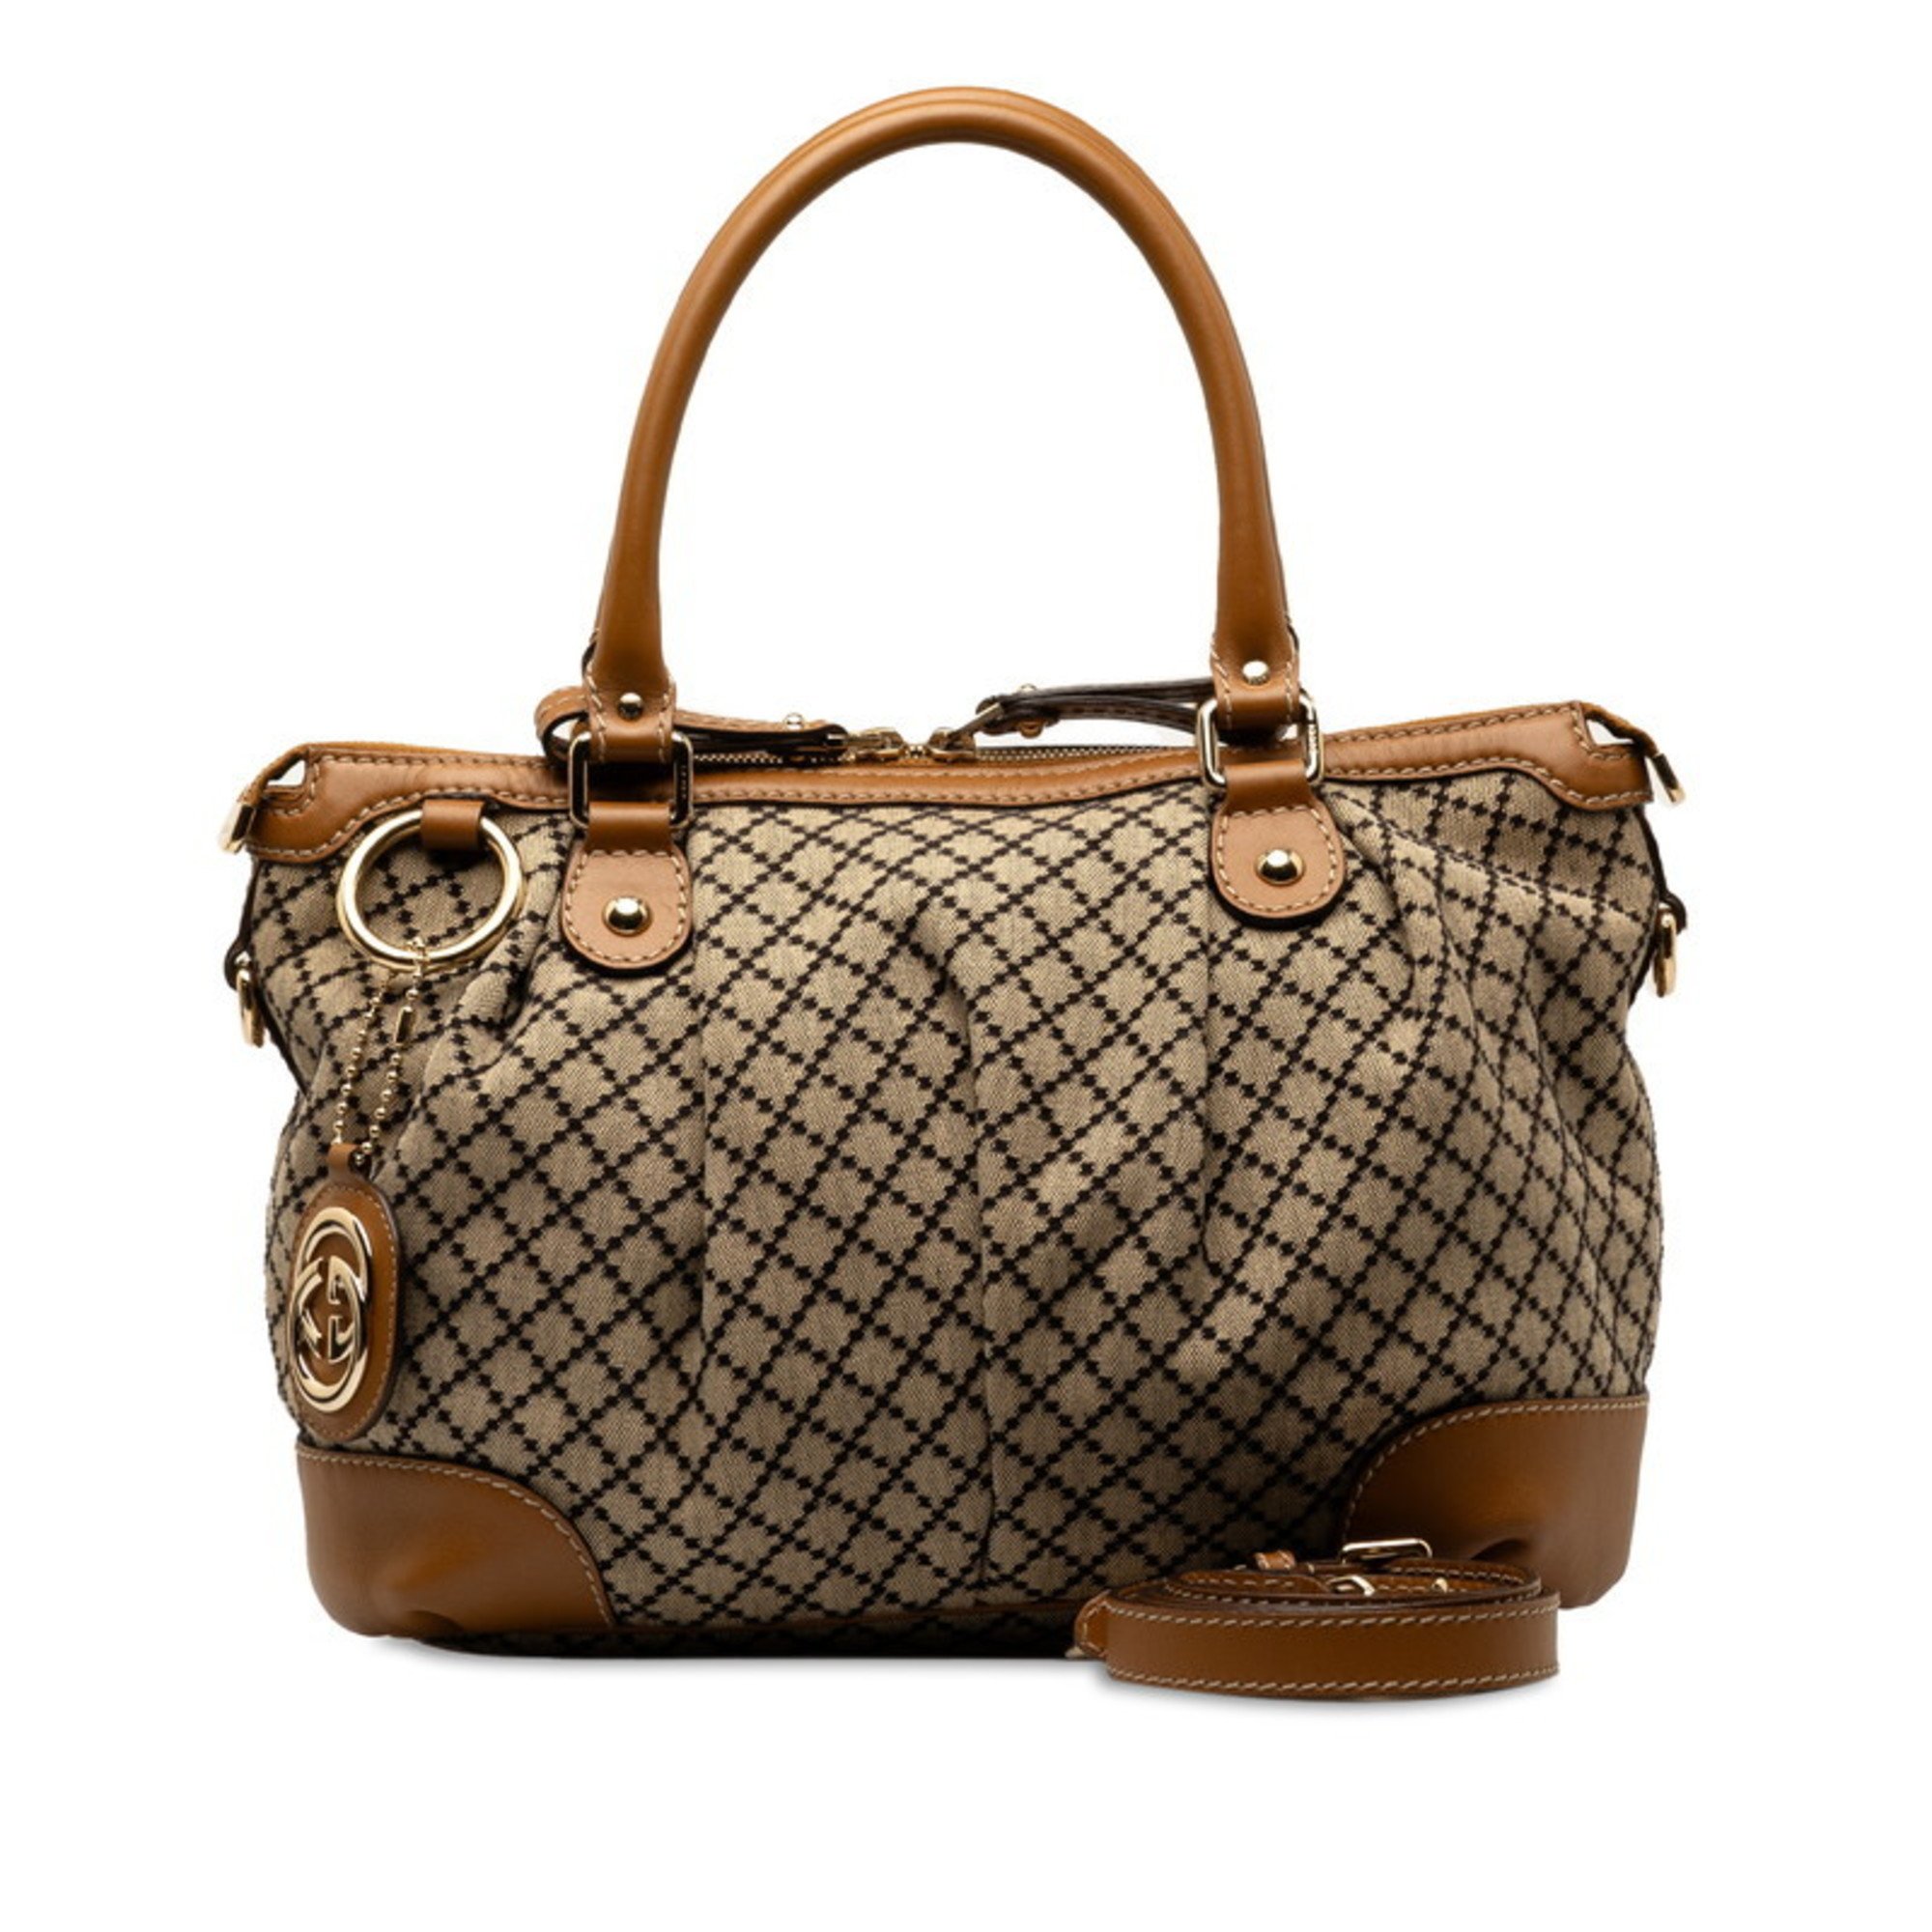 Gucci Diamante Sukey Handbag Shoulder Bag 247902 Beige Brown Canvas Leather Women's GUCCI